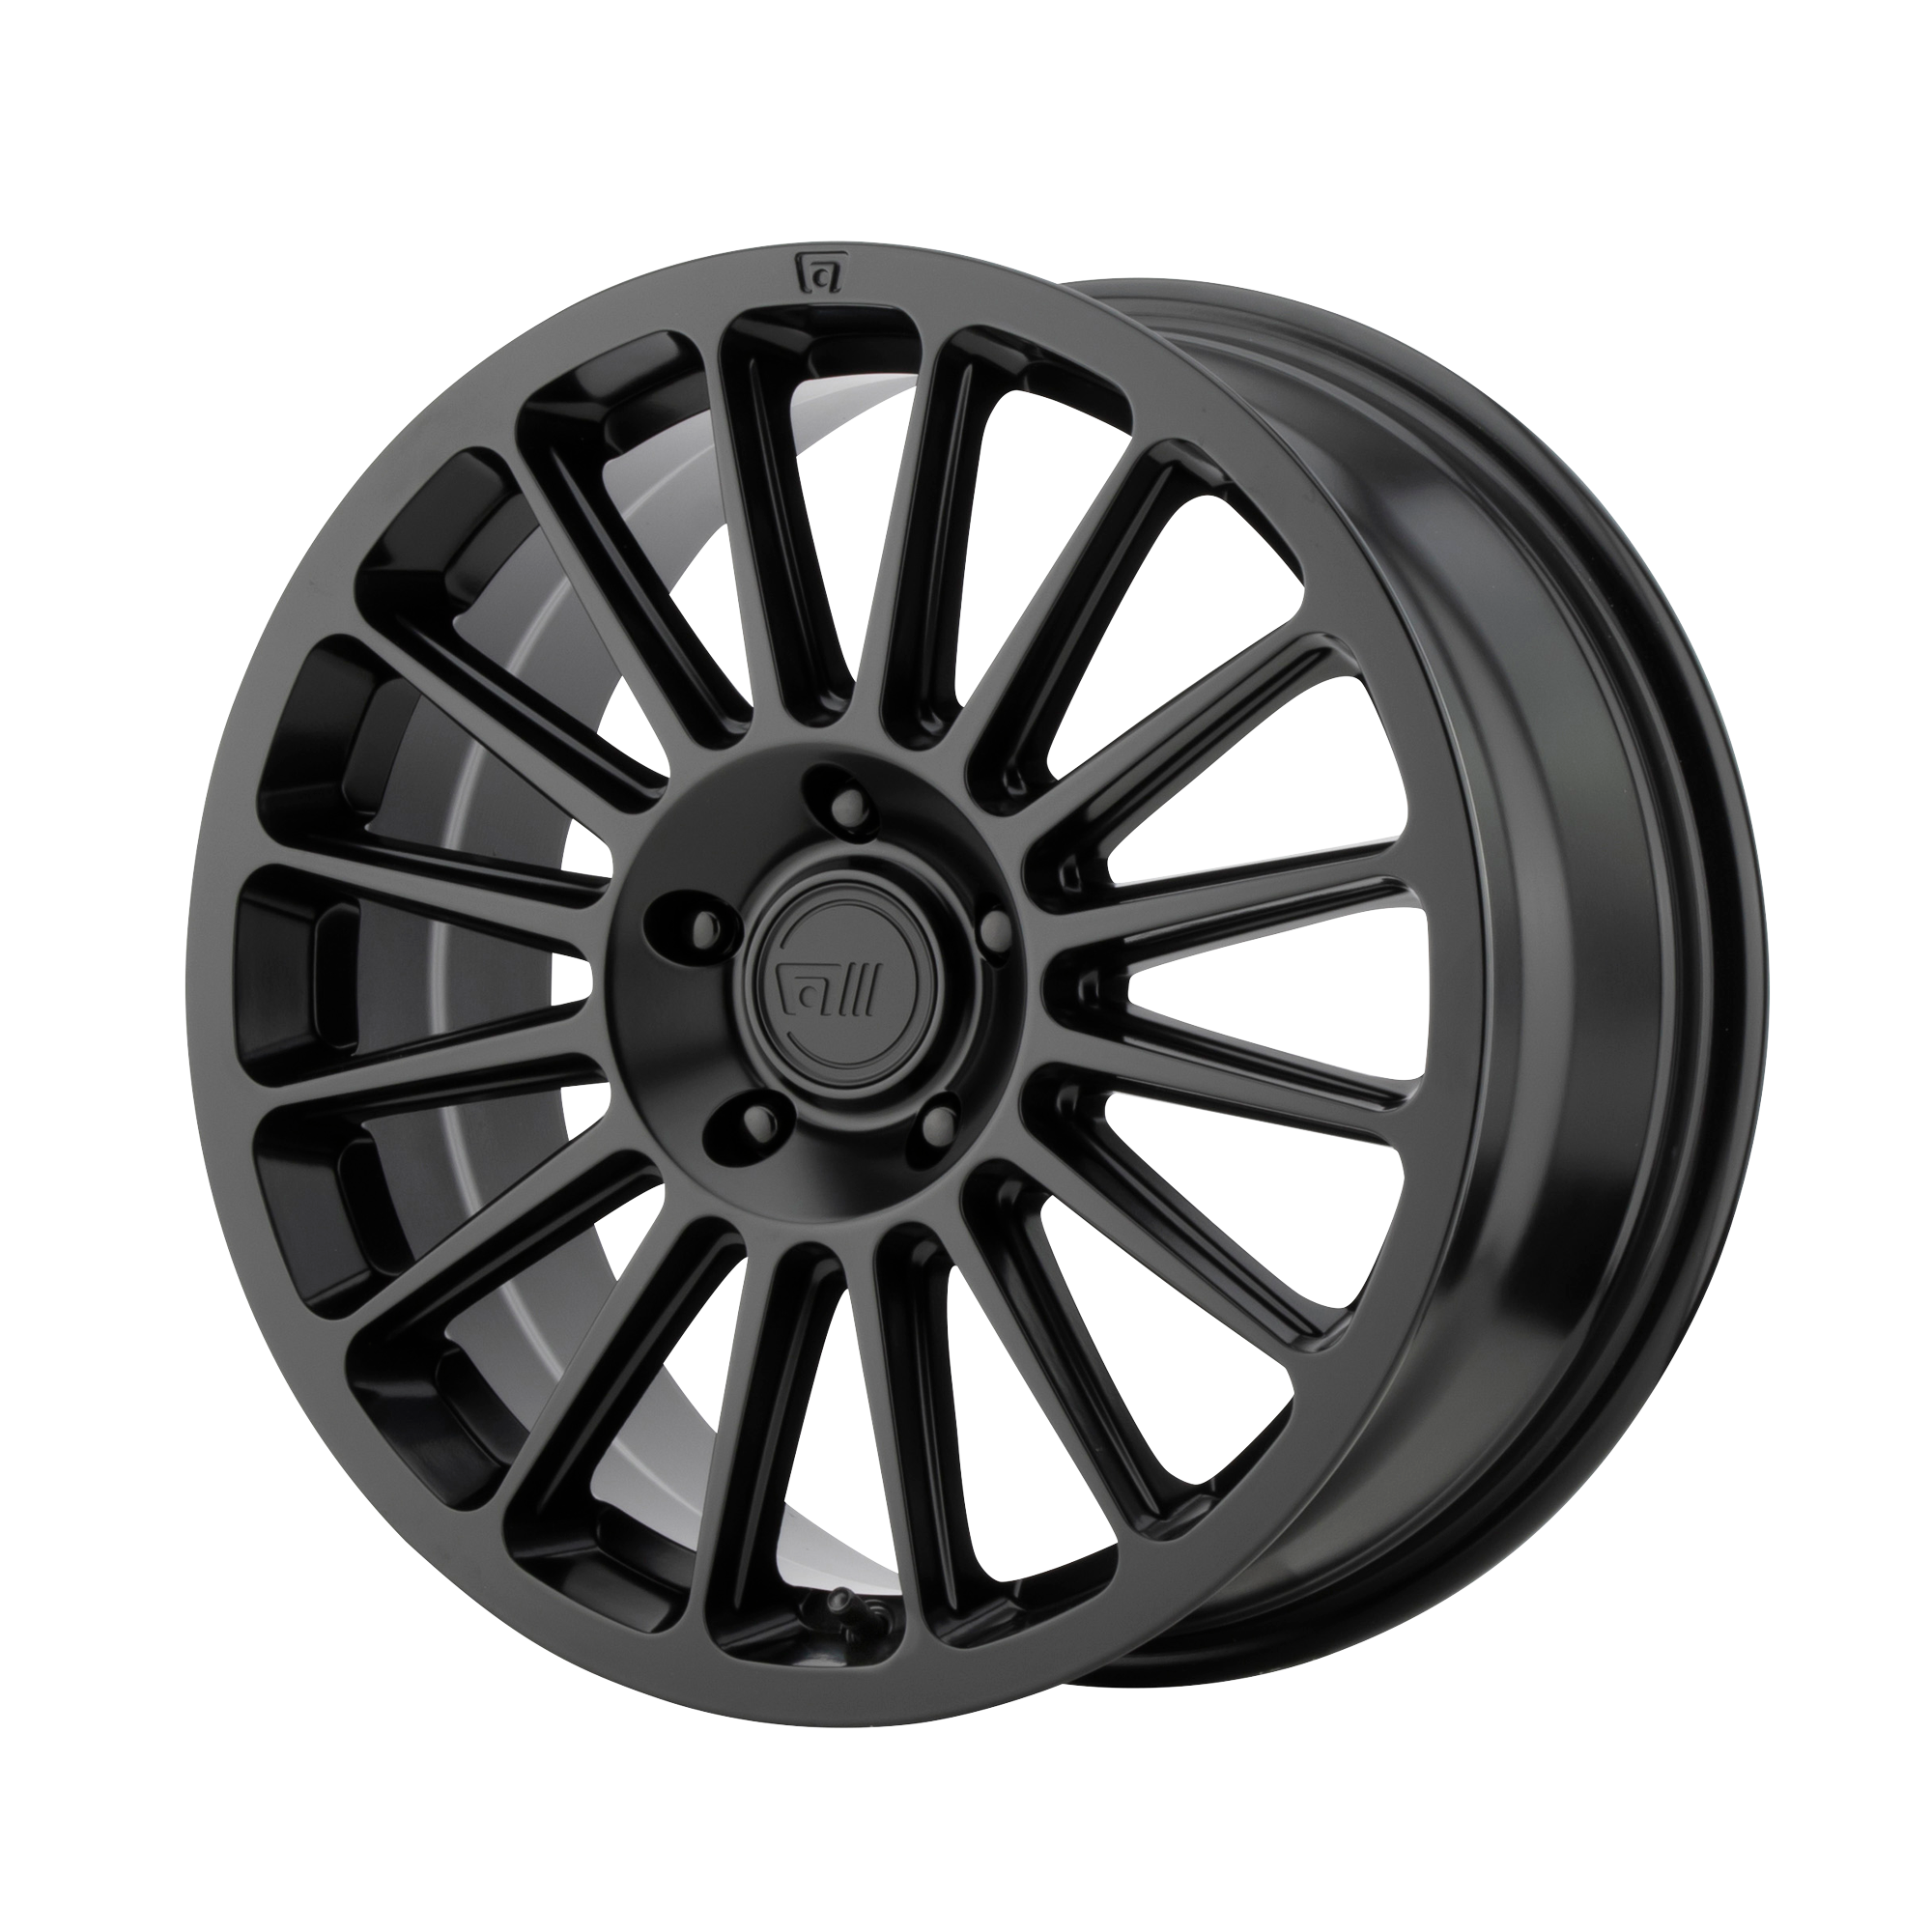 MR141 15x7 5x100.00 SATIN BLACK (15 mm) - Tires and Engine Performance